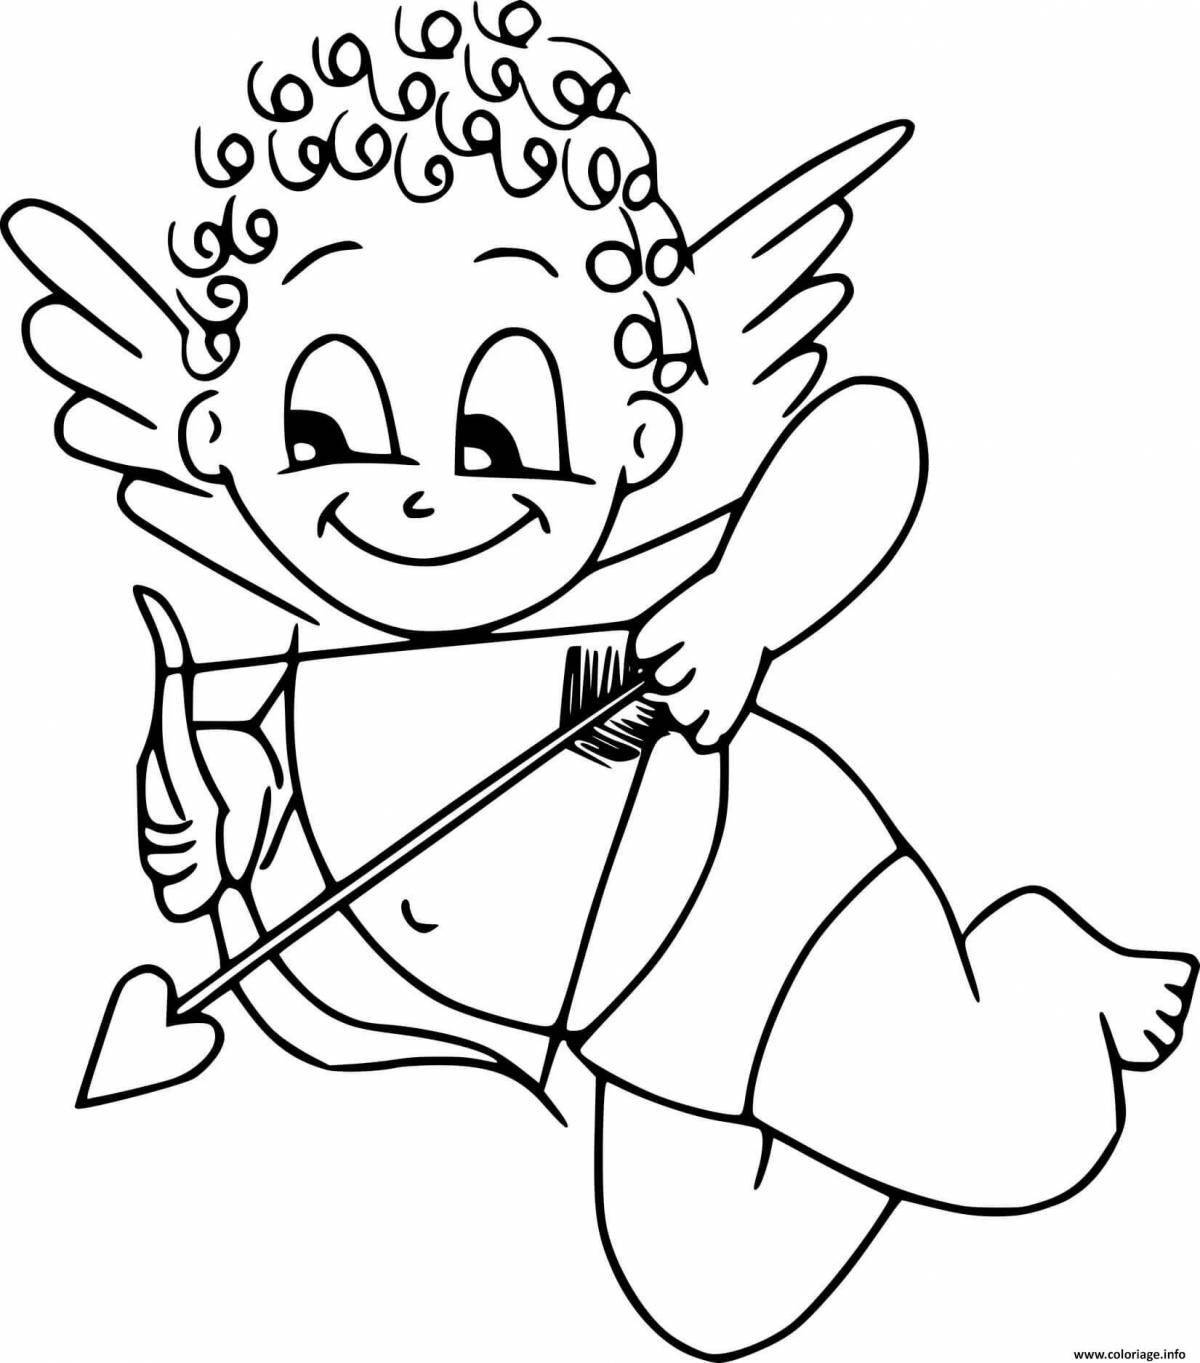 Rampant Cupid coloring page